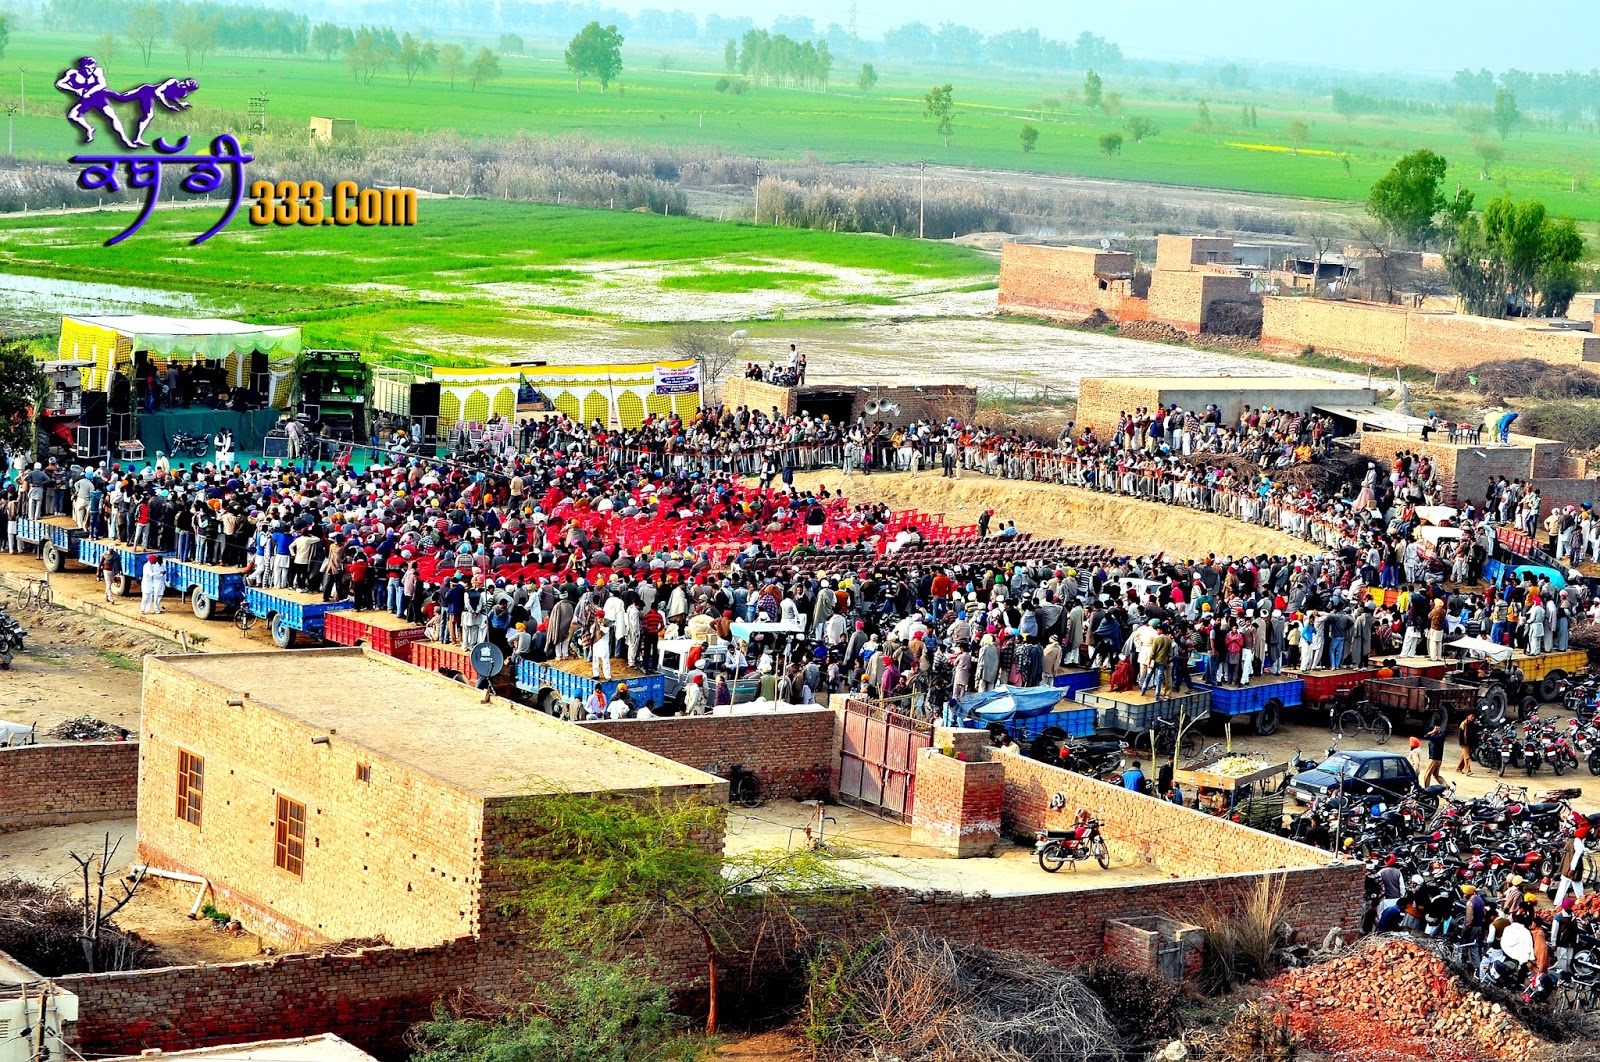 punjabi tractor wallpaper,crowd,people,fan,community,stadium